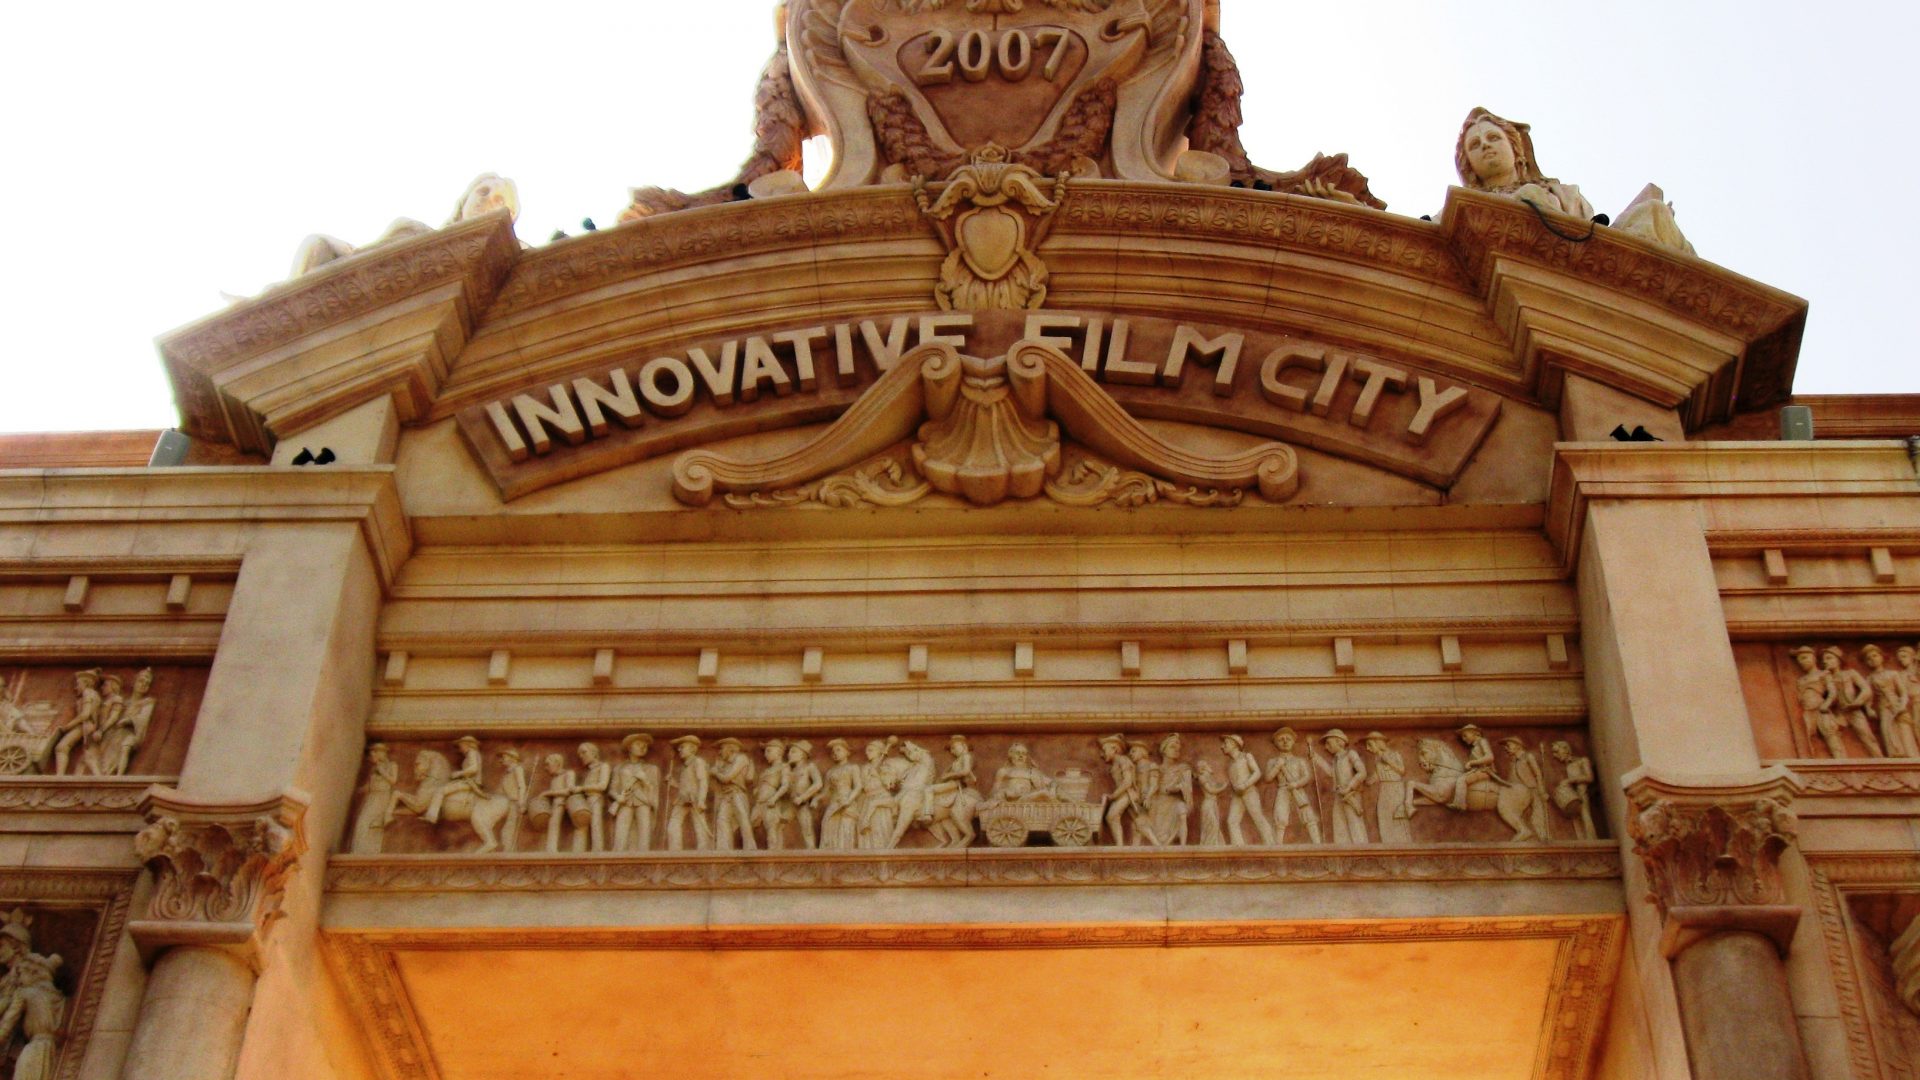 Innovative Film City Karnataka Statue Bangalore India ...